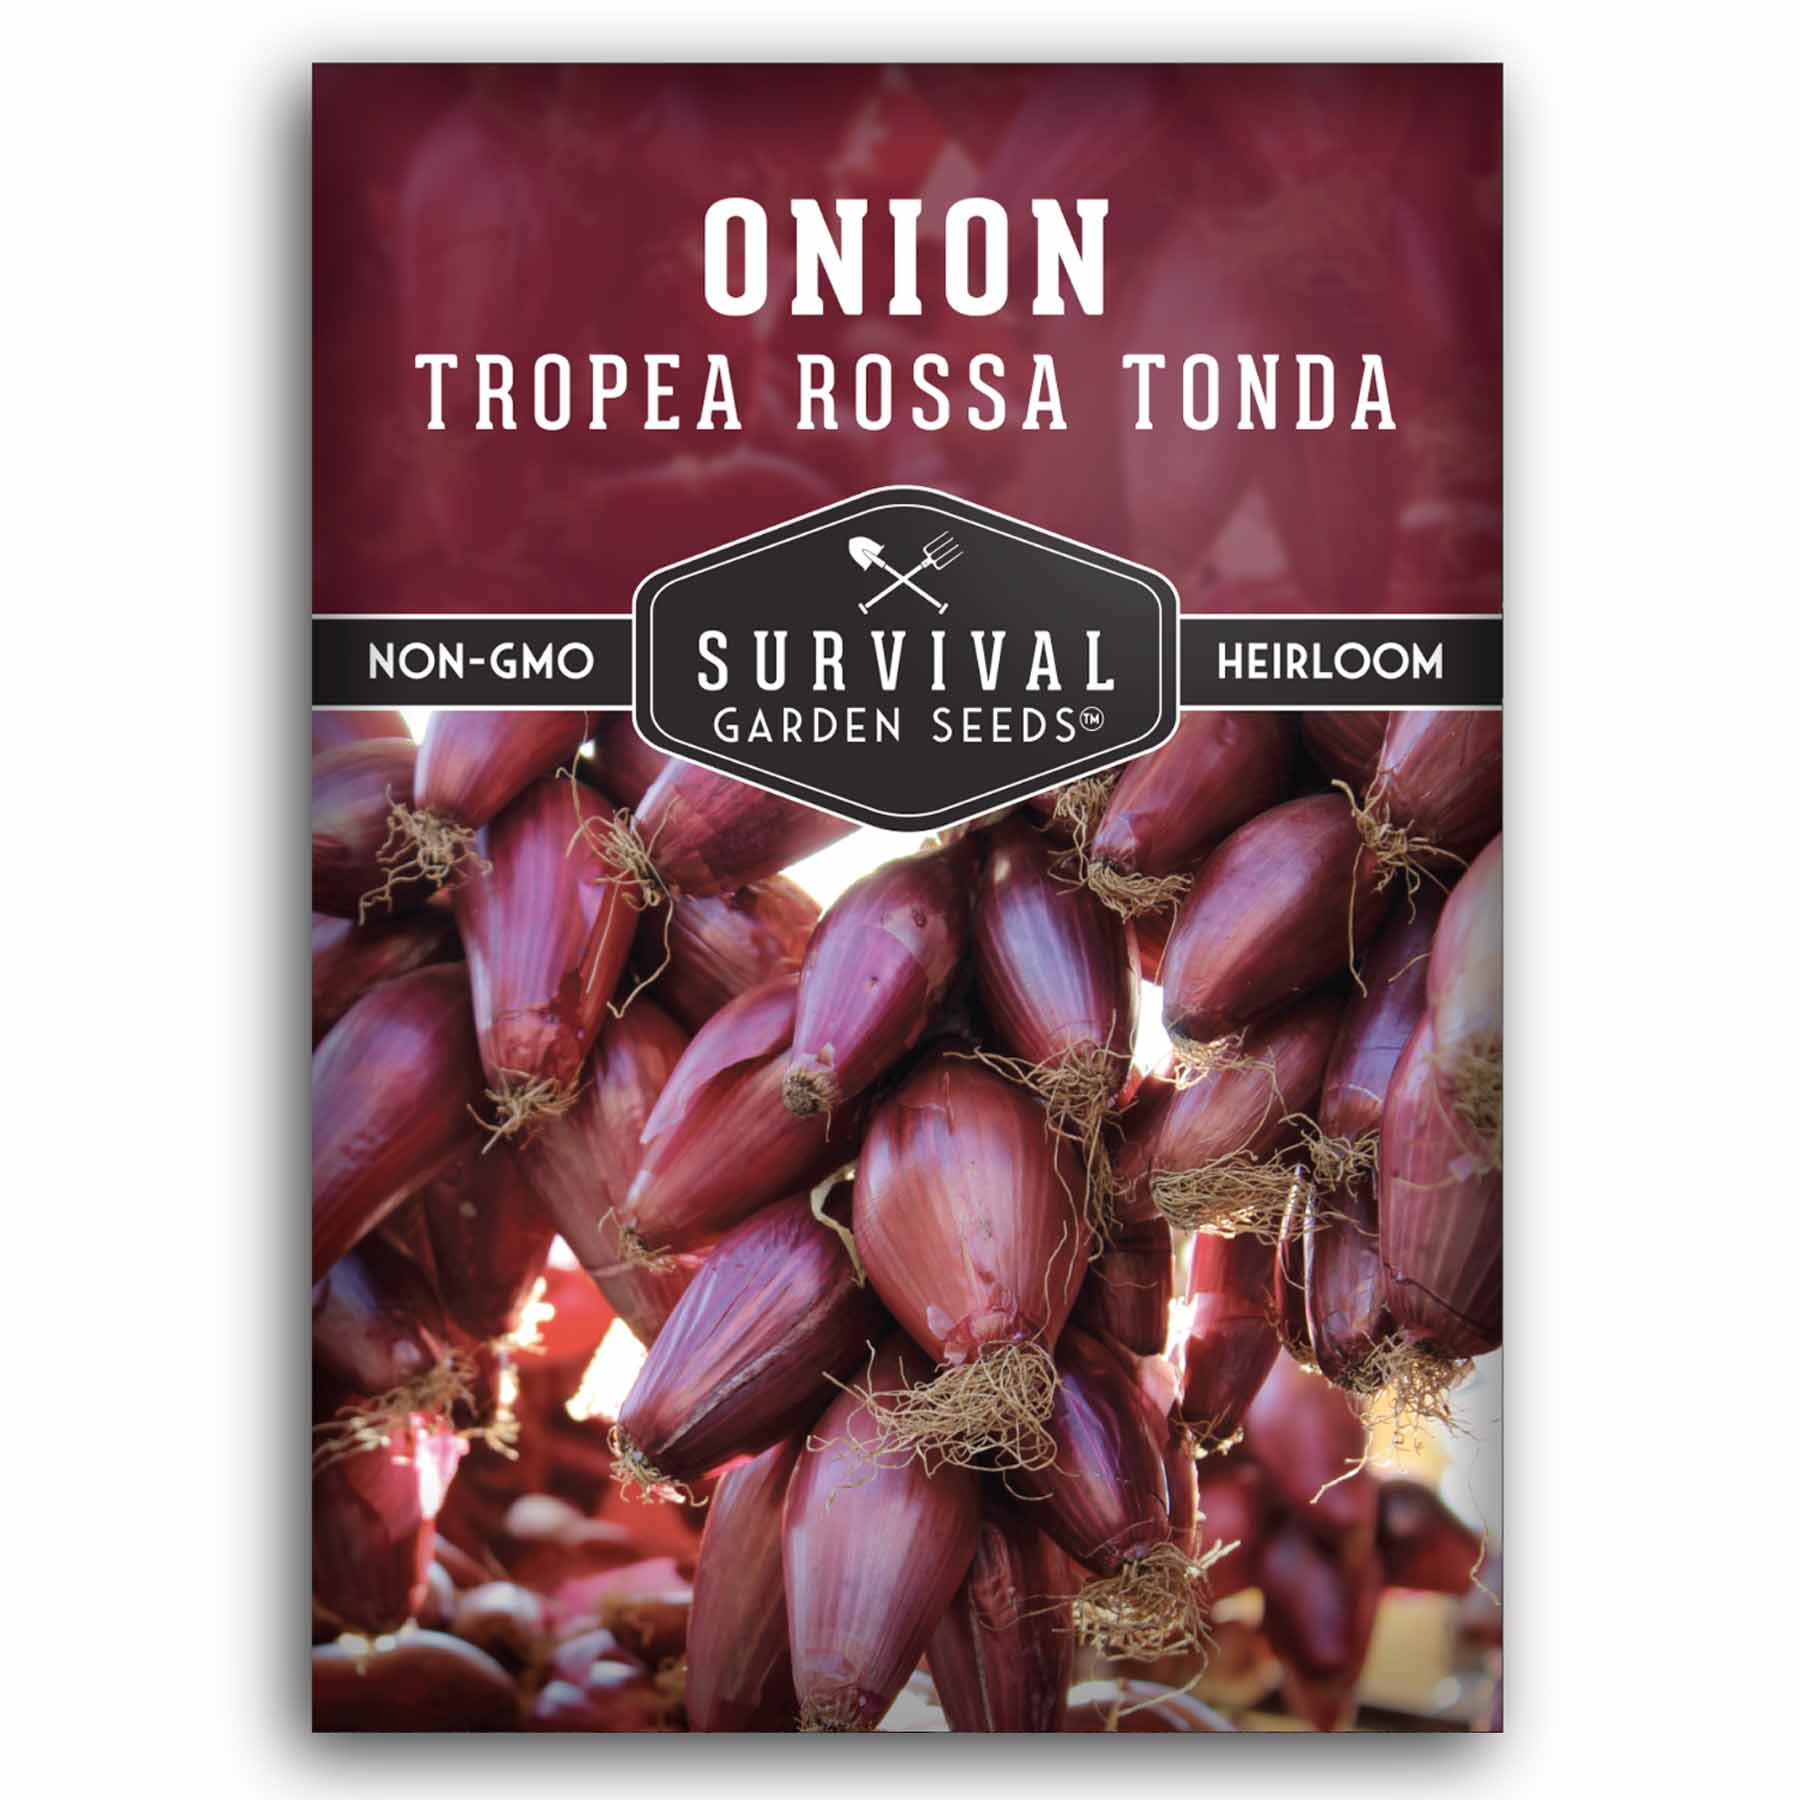 1 Packet of Tropea Rossa Tonda onion seeds